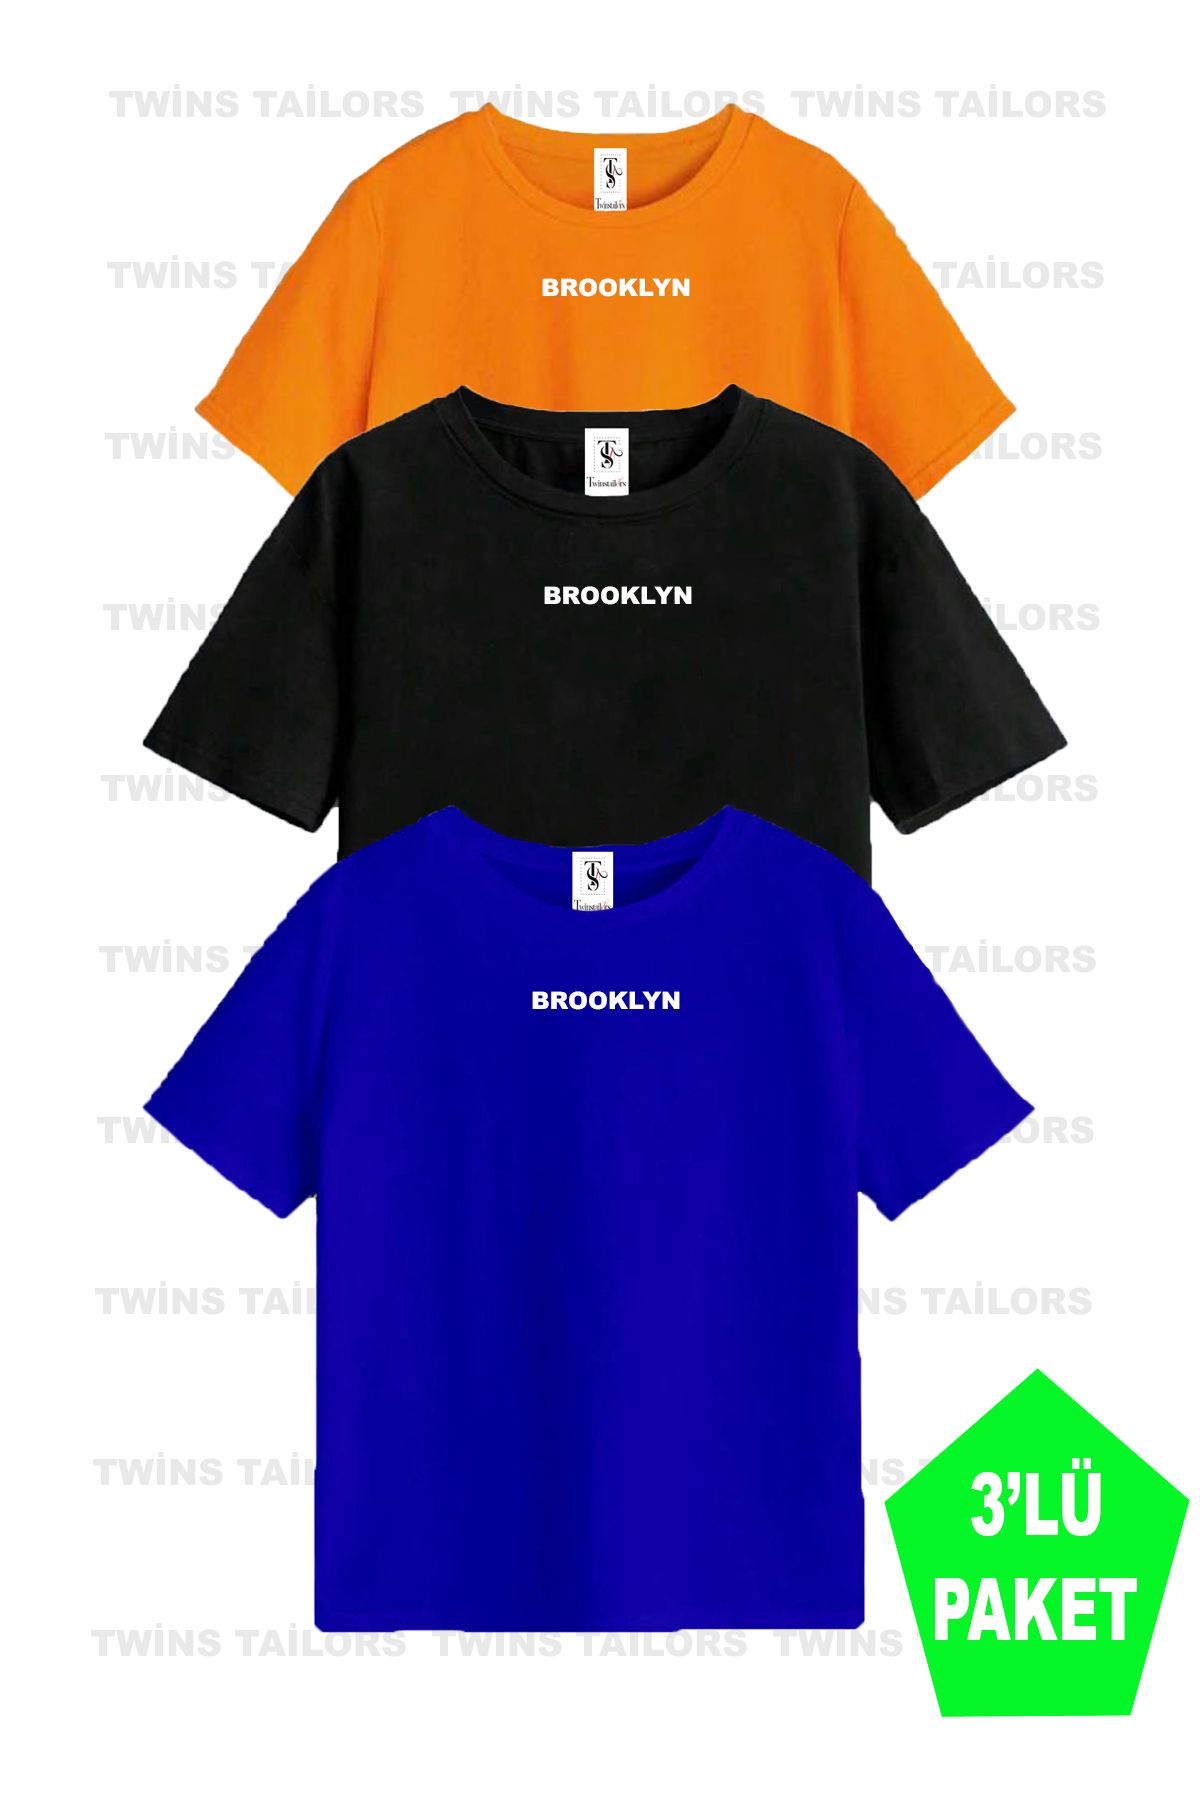 twins tailors Brooklyn Baskılı 3'lü Paket Unisex Turuncu-Siyah-Saks Mavisi Çocuk Tişört/T-Shirt